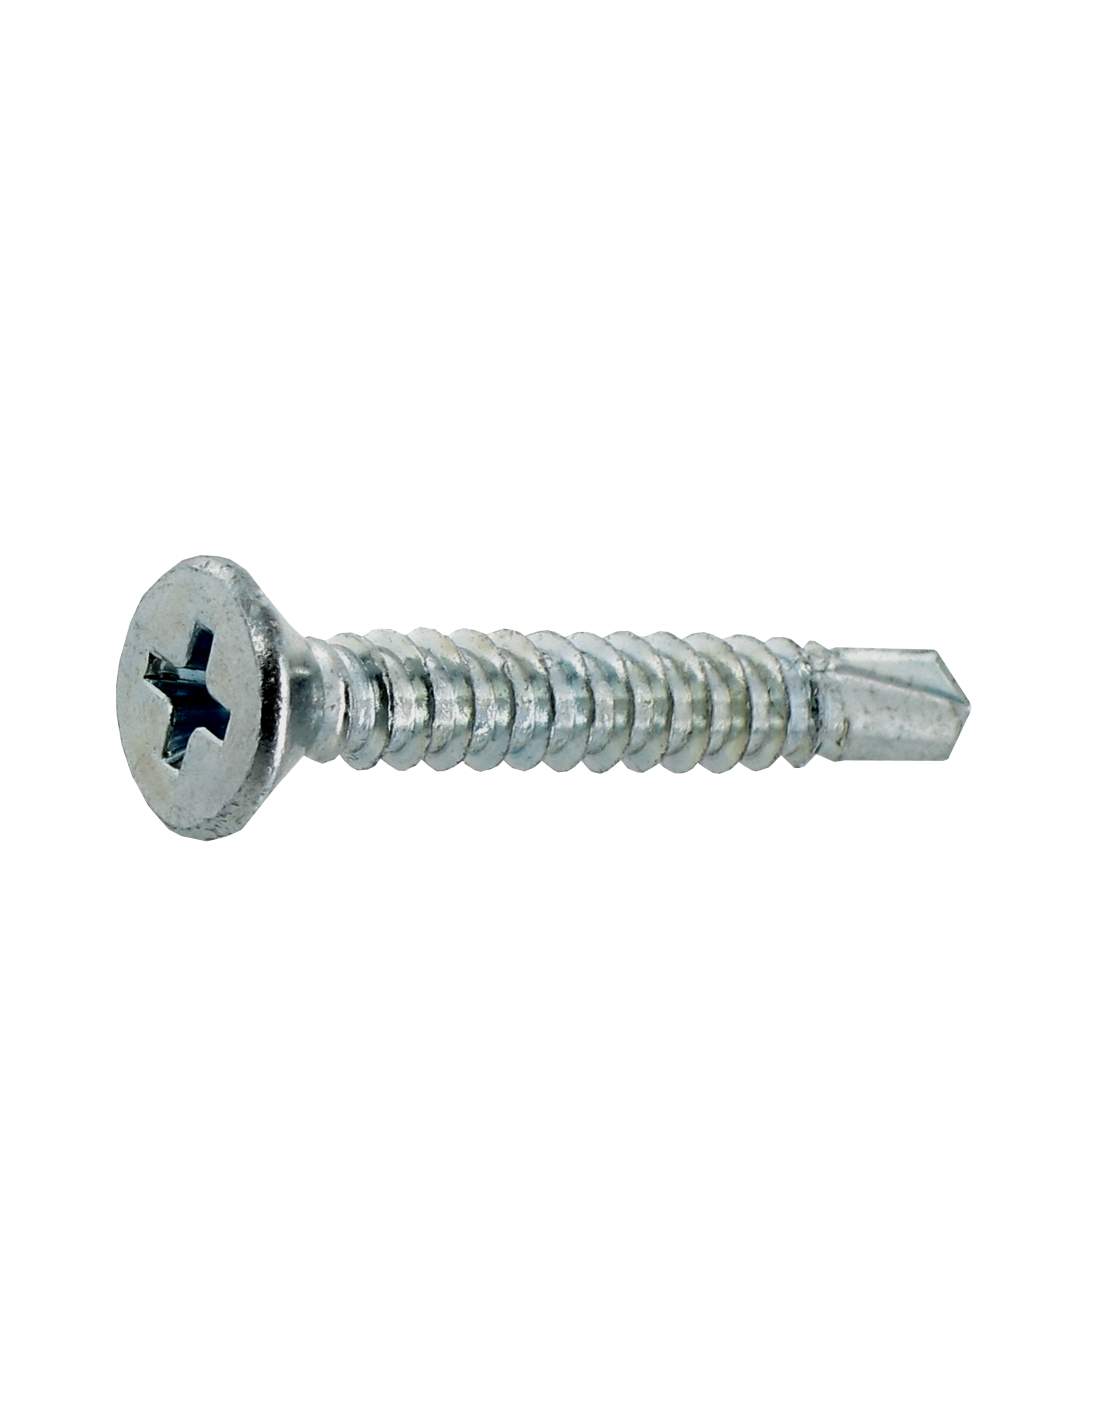 AZI 4.8x25 self-drilling countersunk-head tapping screws, 12 pcs.